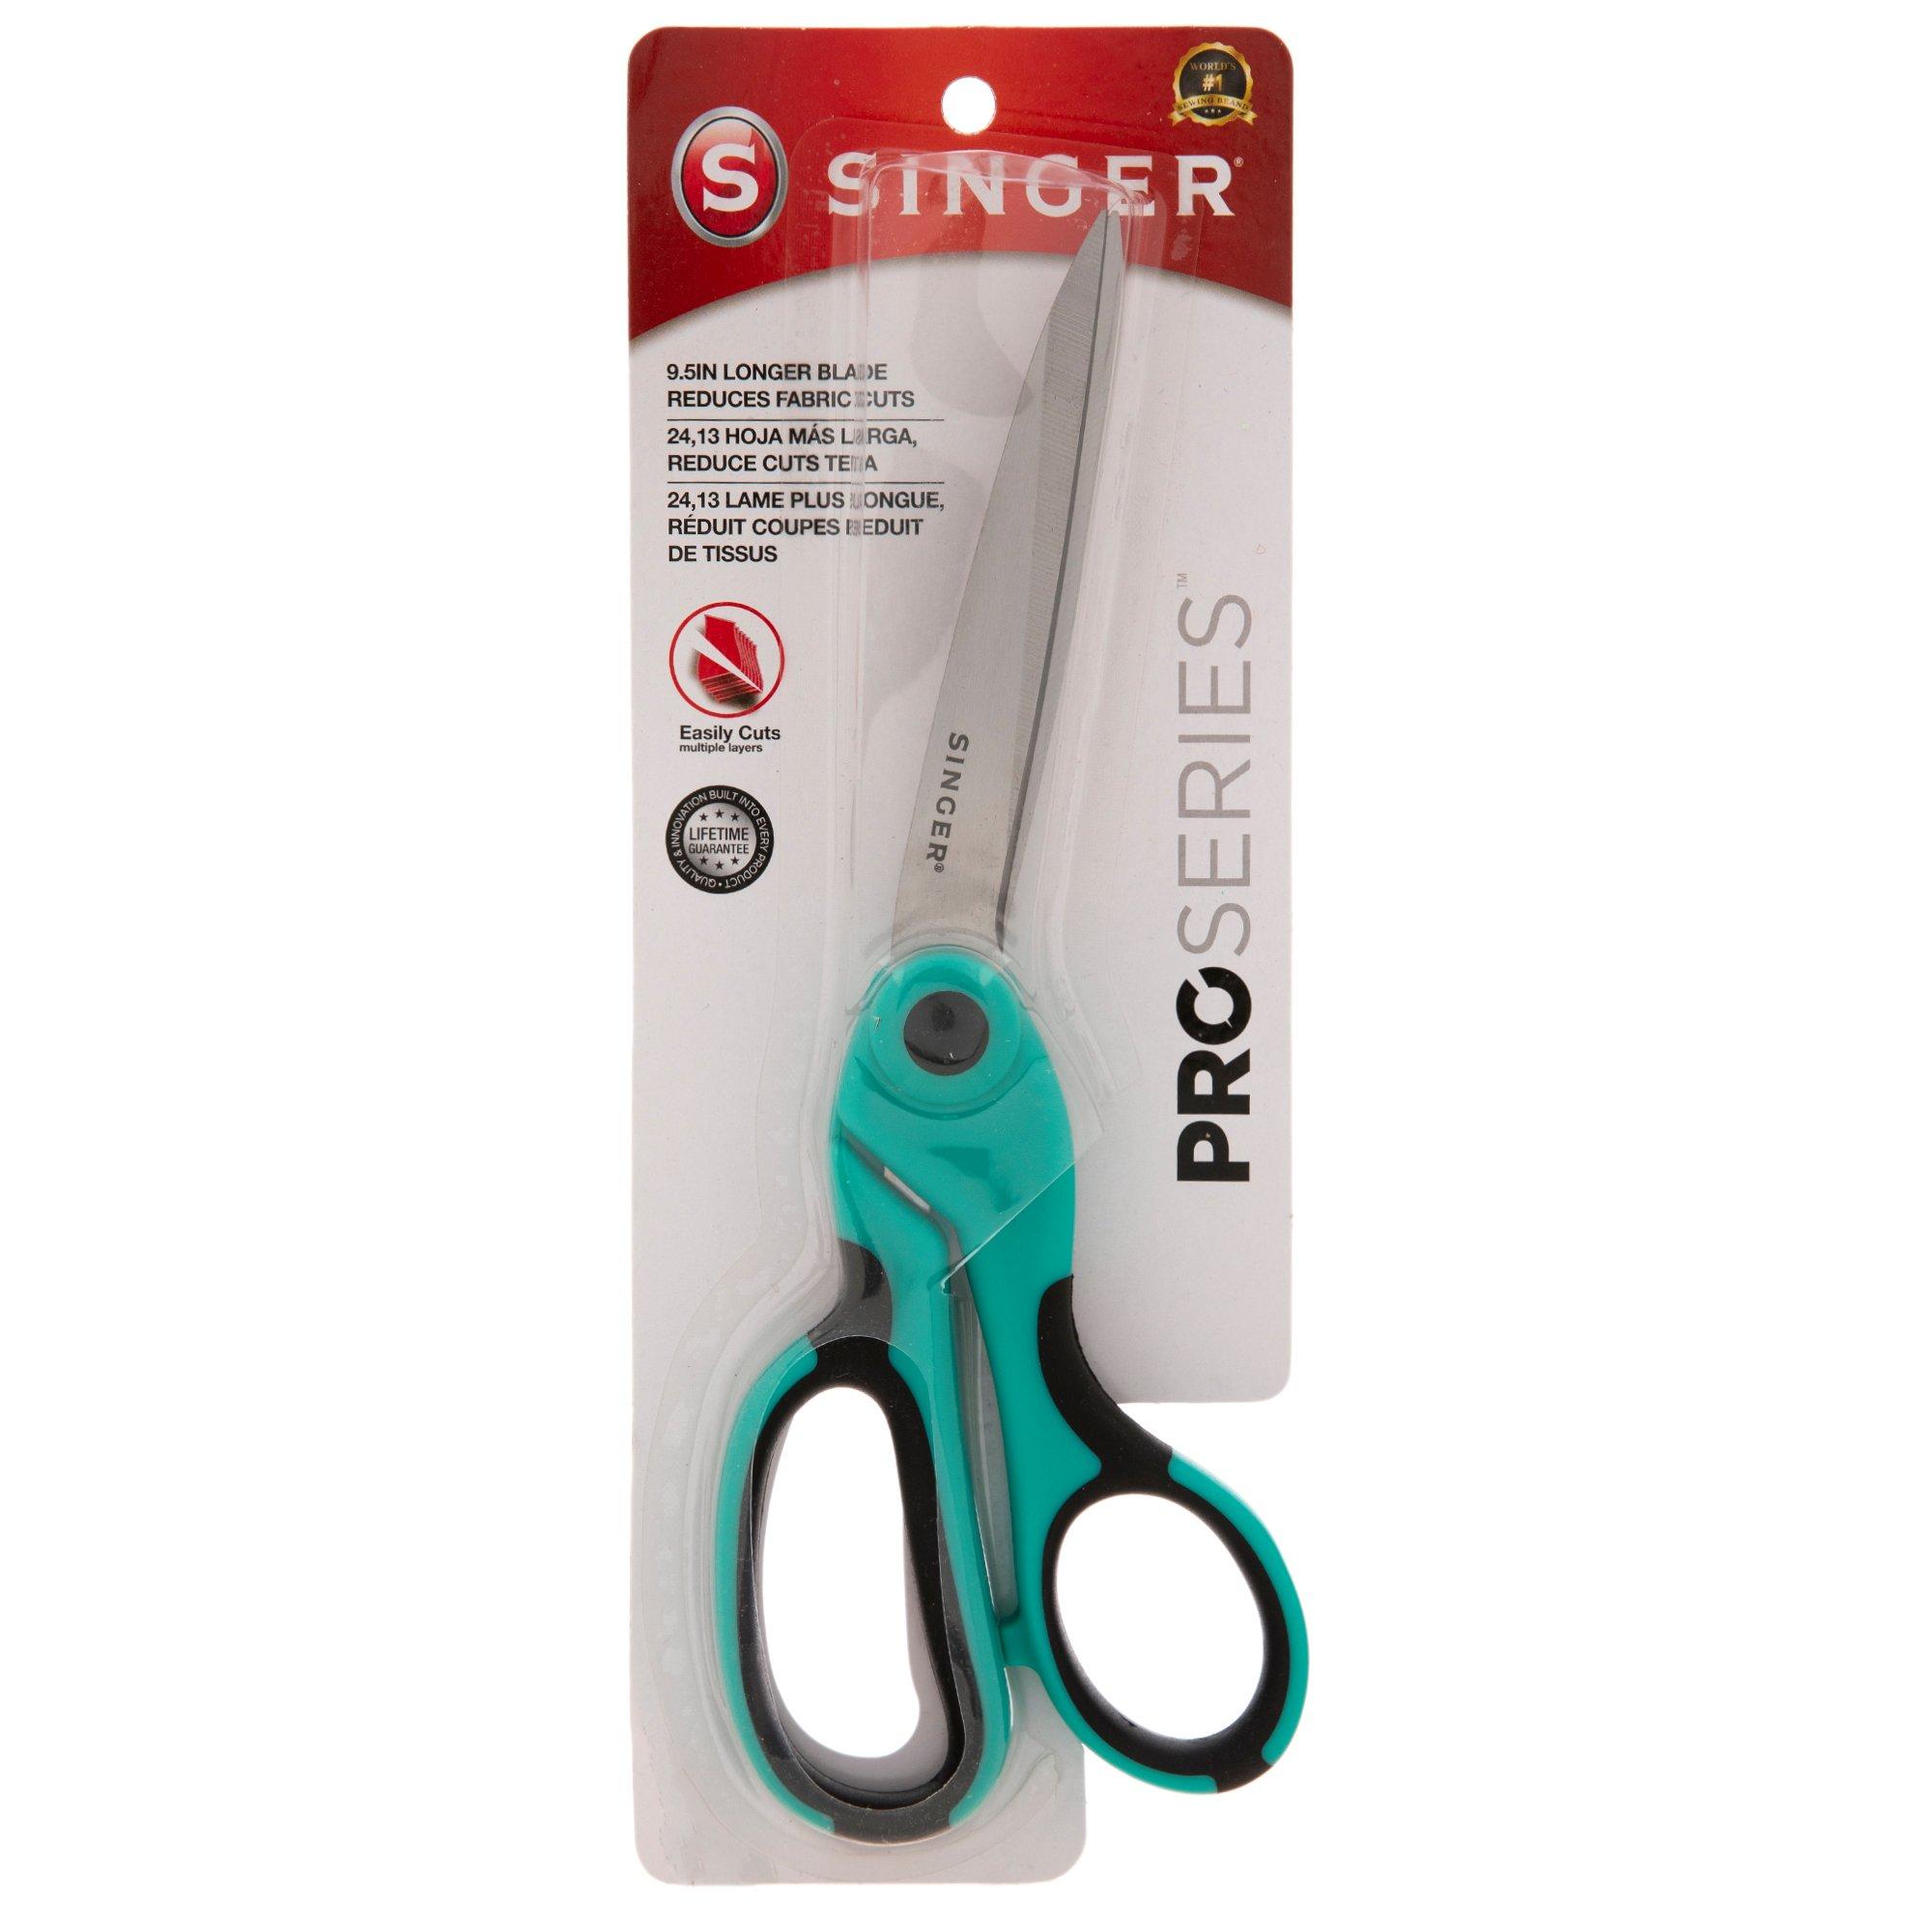 Pro Series Spring Handle Scissors 9.5 - Singer